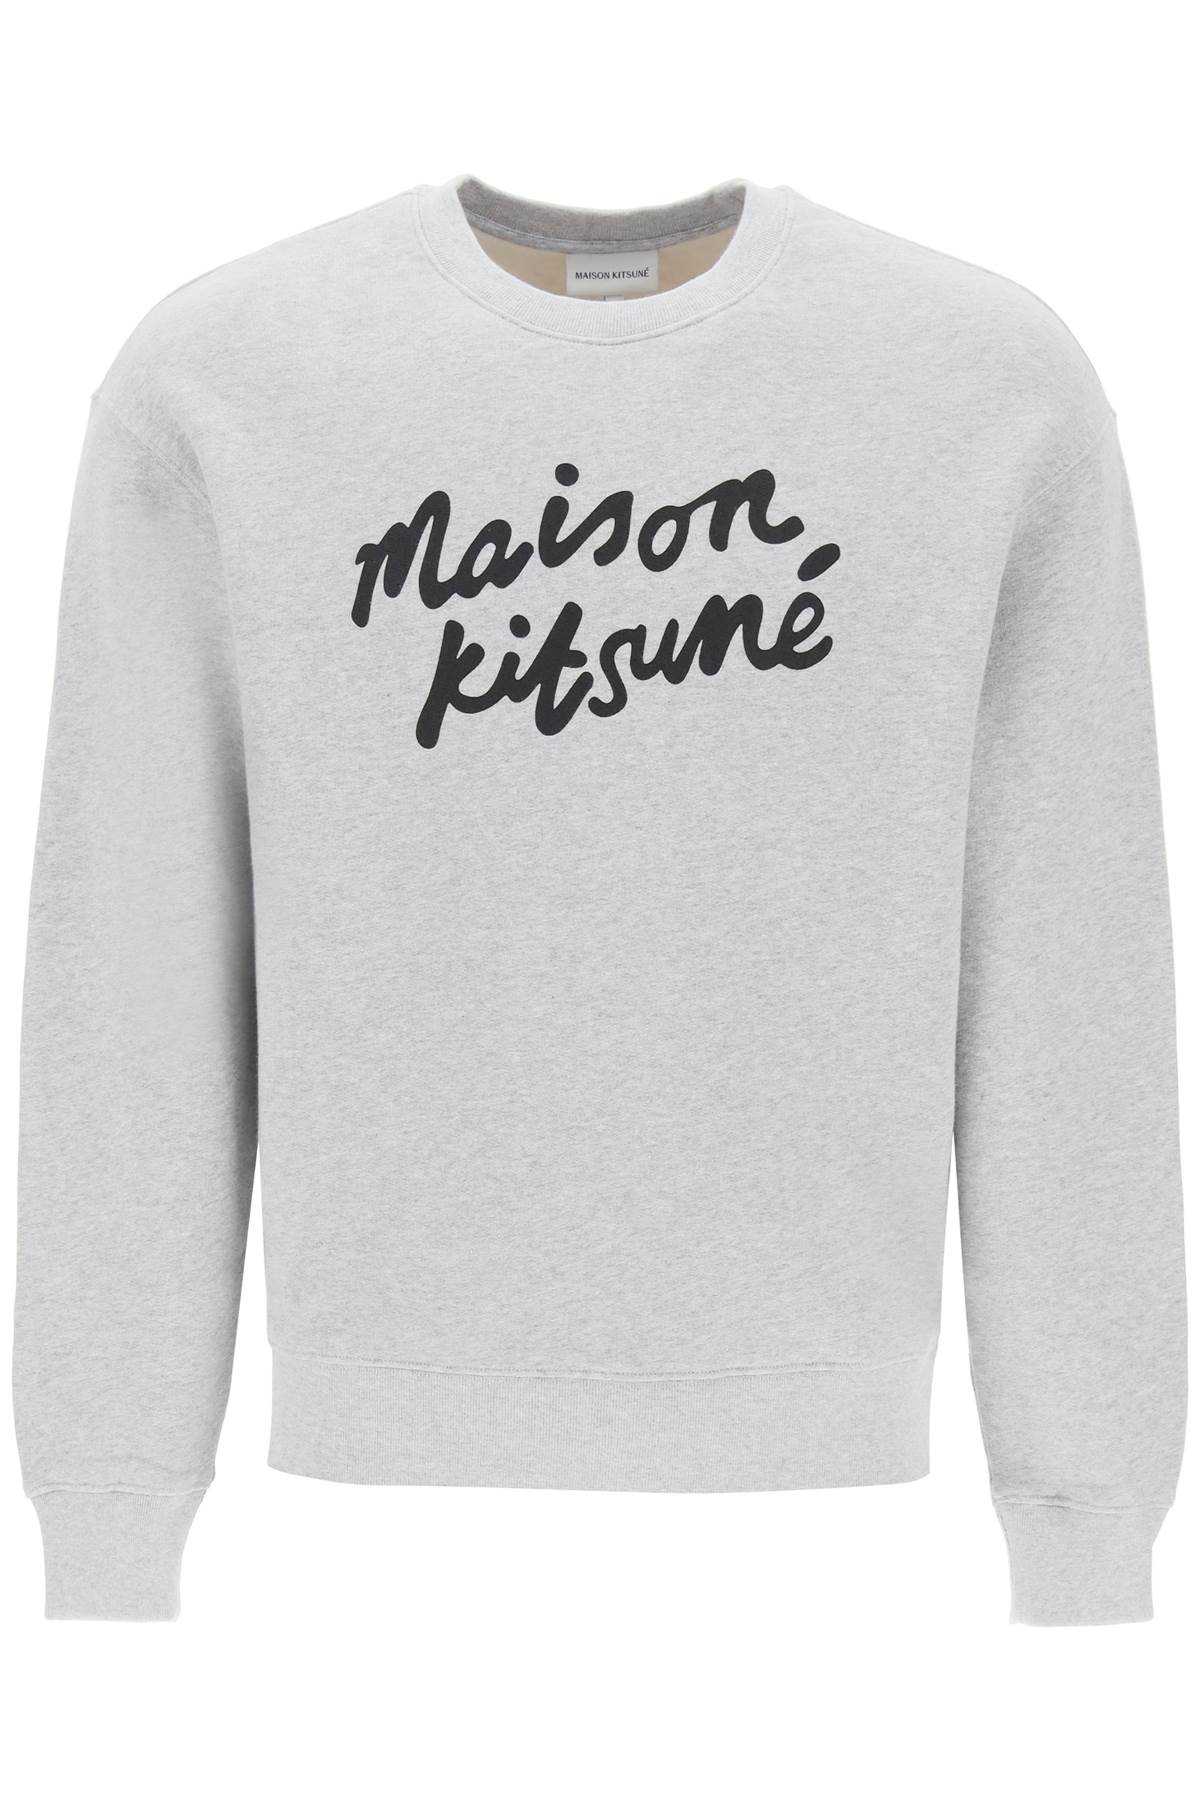 Maison kitsune crewneck sweatshirt with logo-0